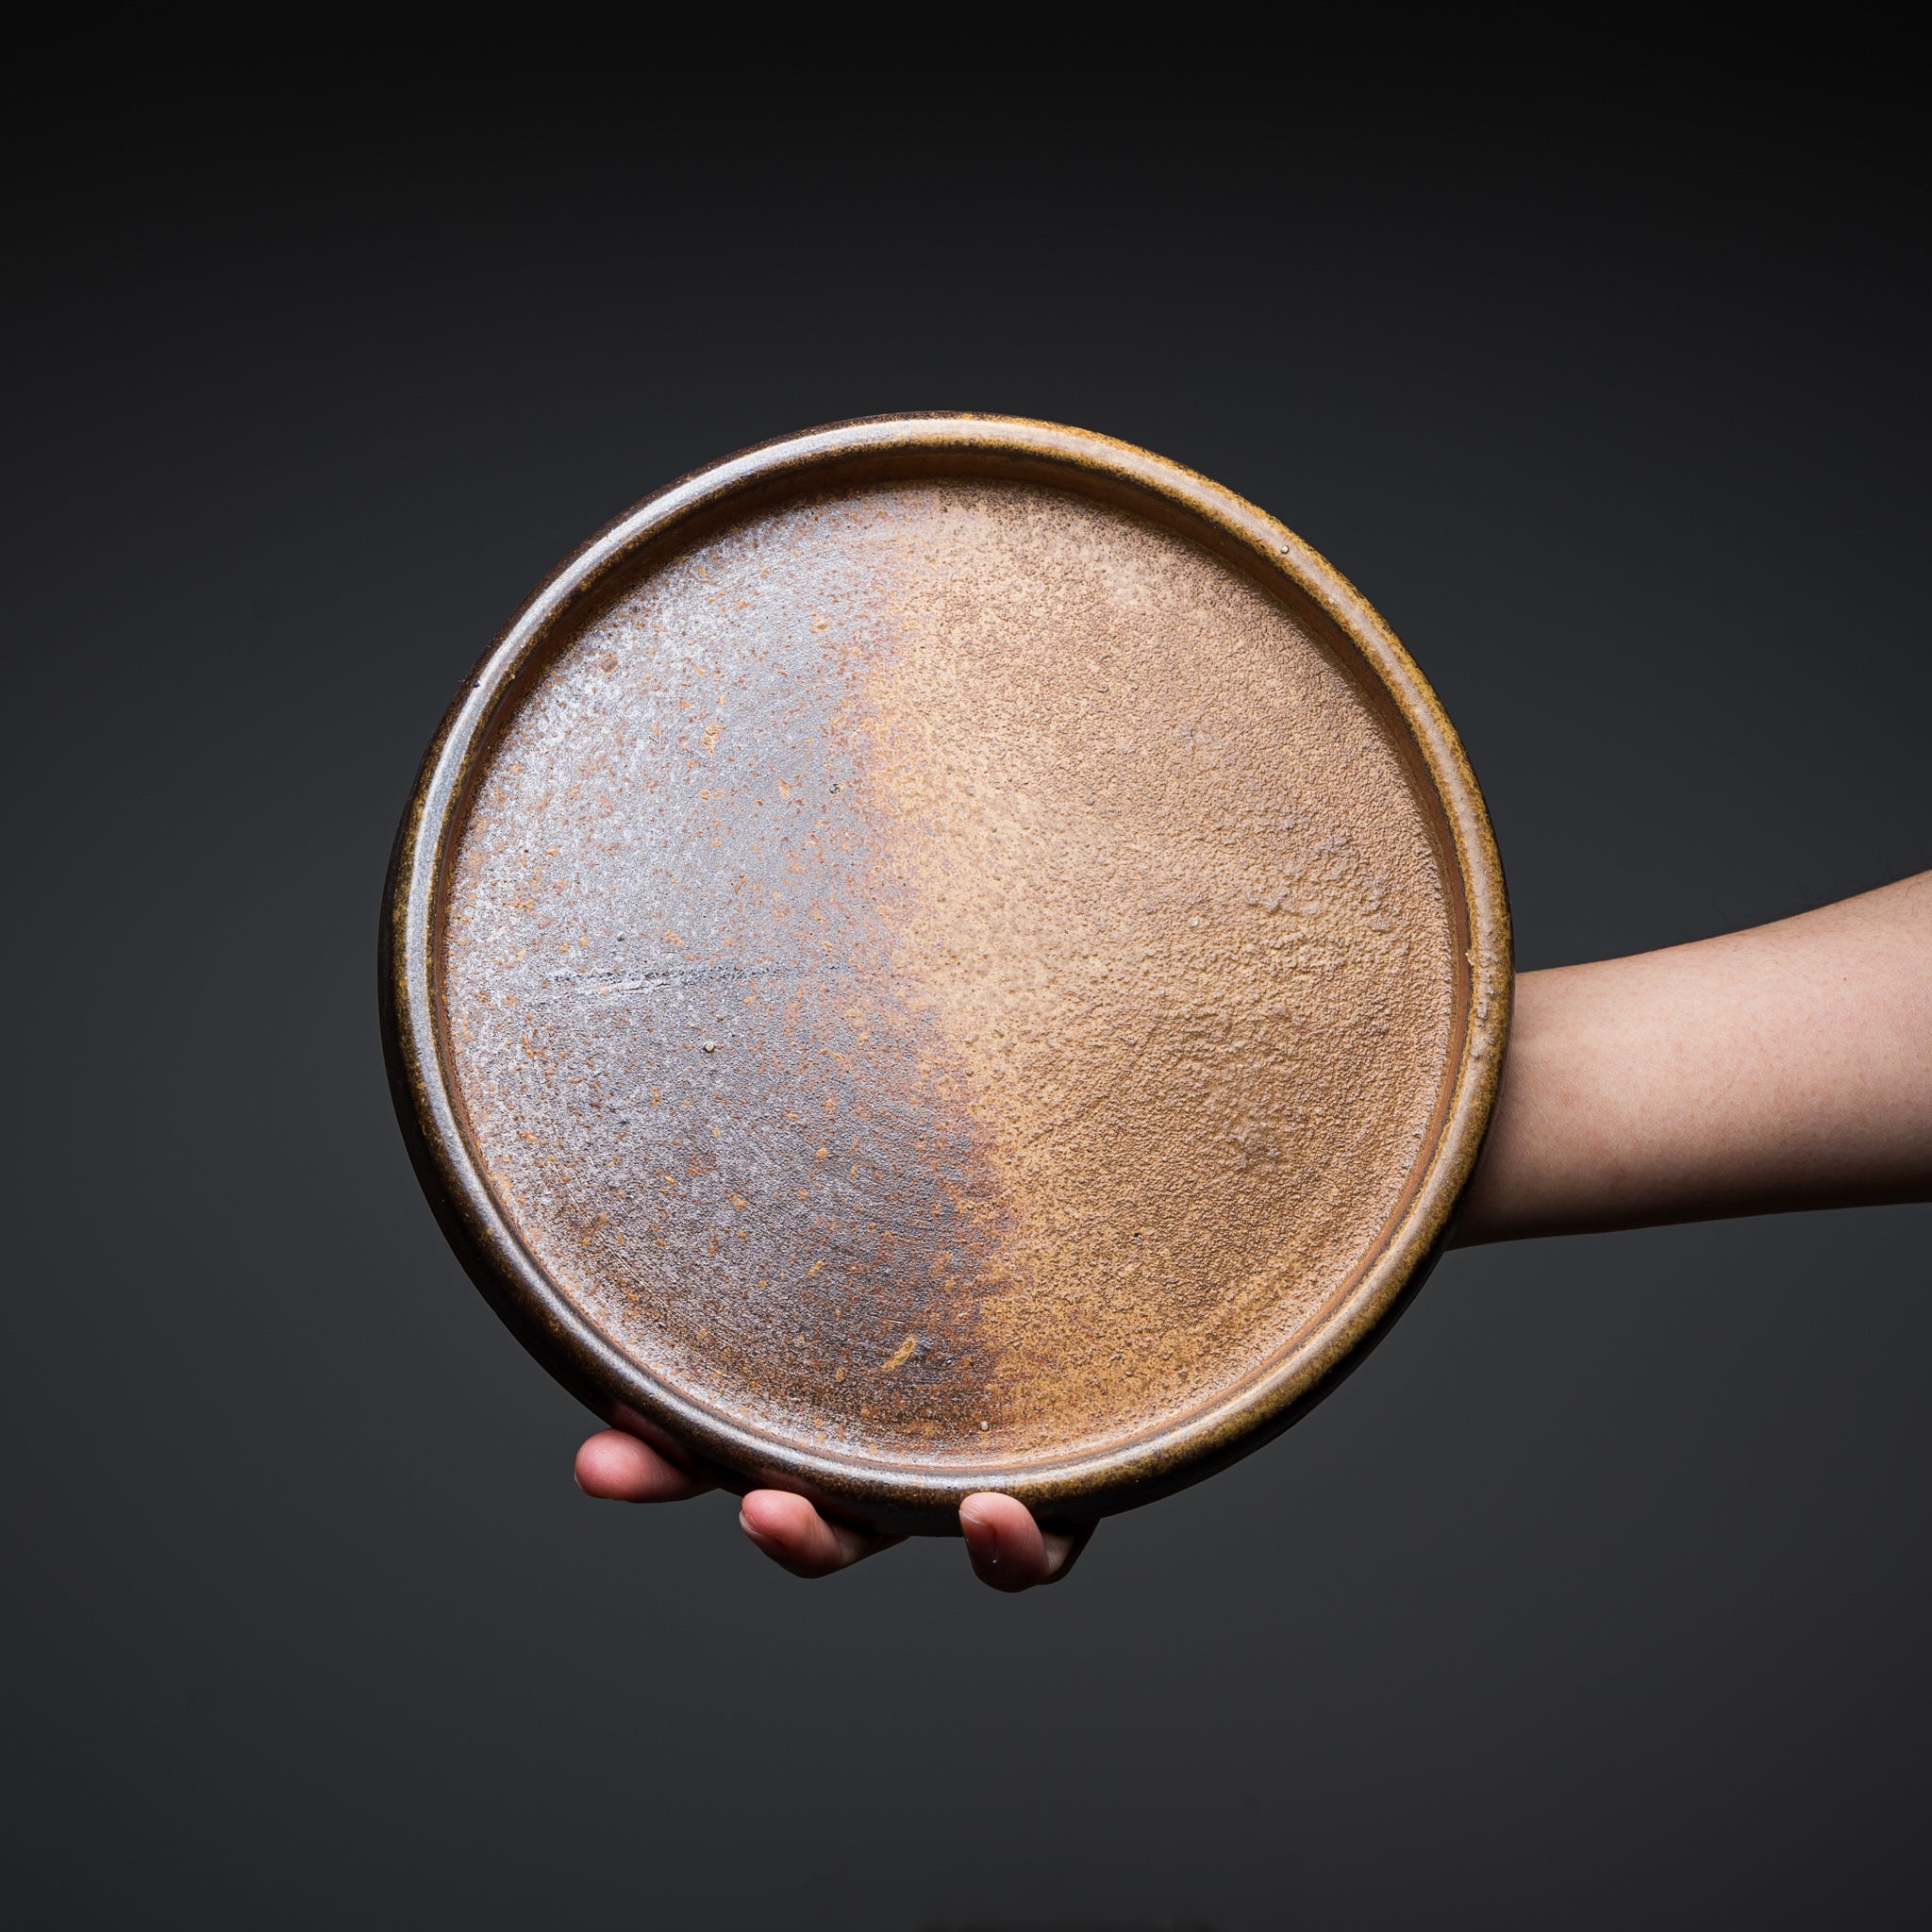 Bizen Pottery Rim Plate - Goma / 備前焼 リム皿